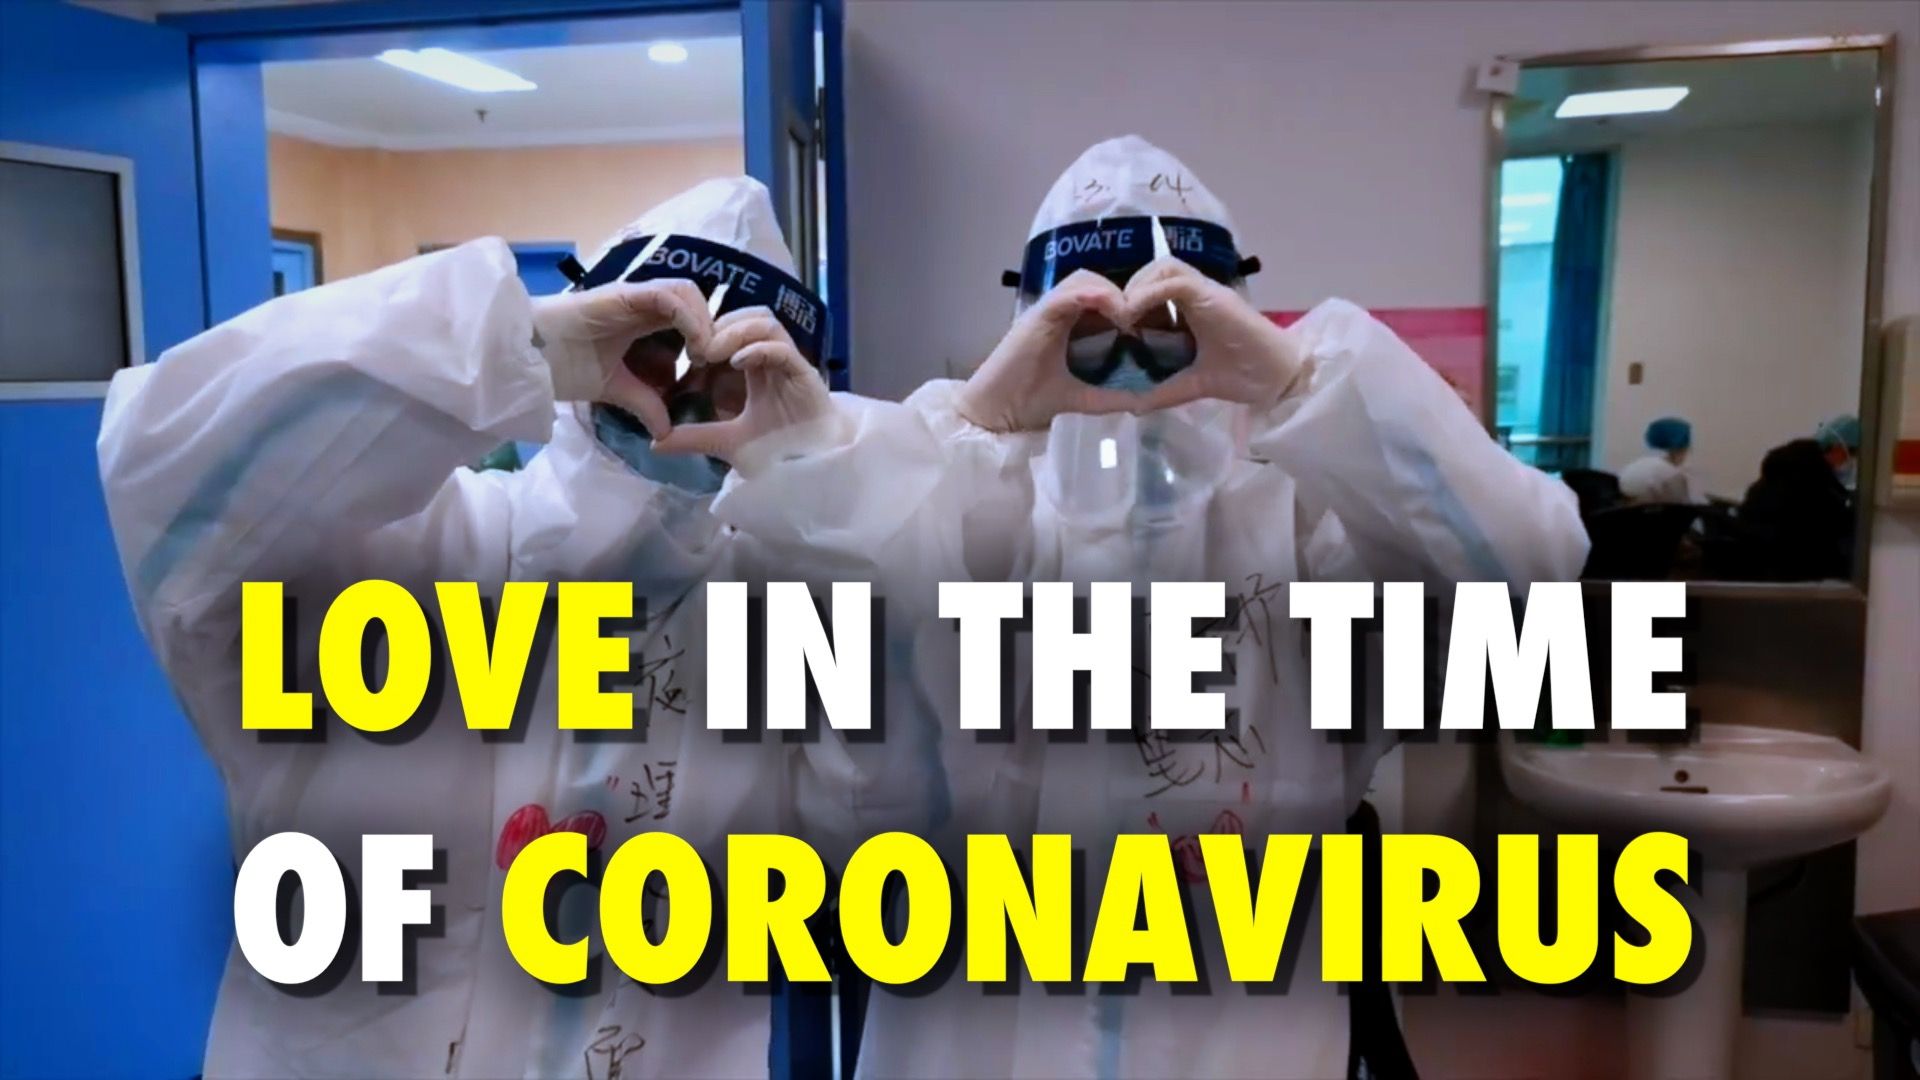 Love in the time of coronavirus